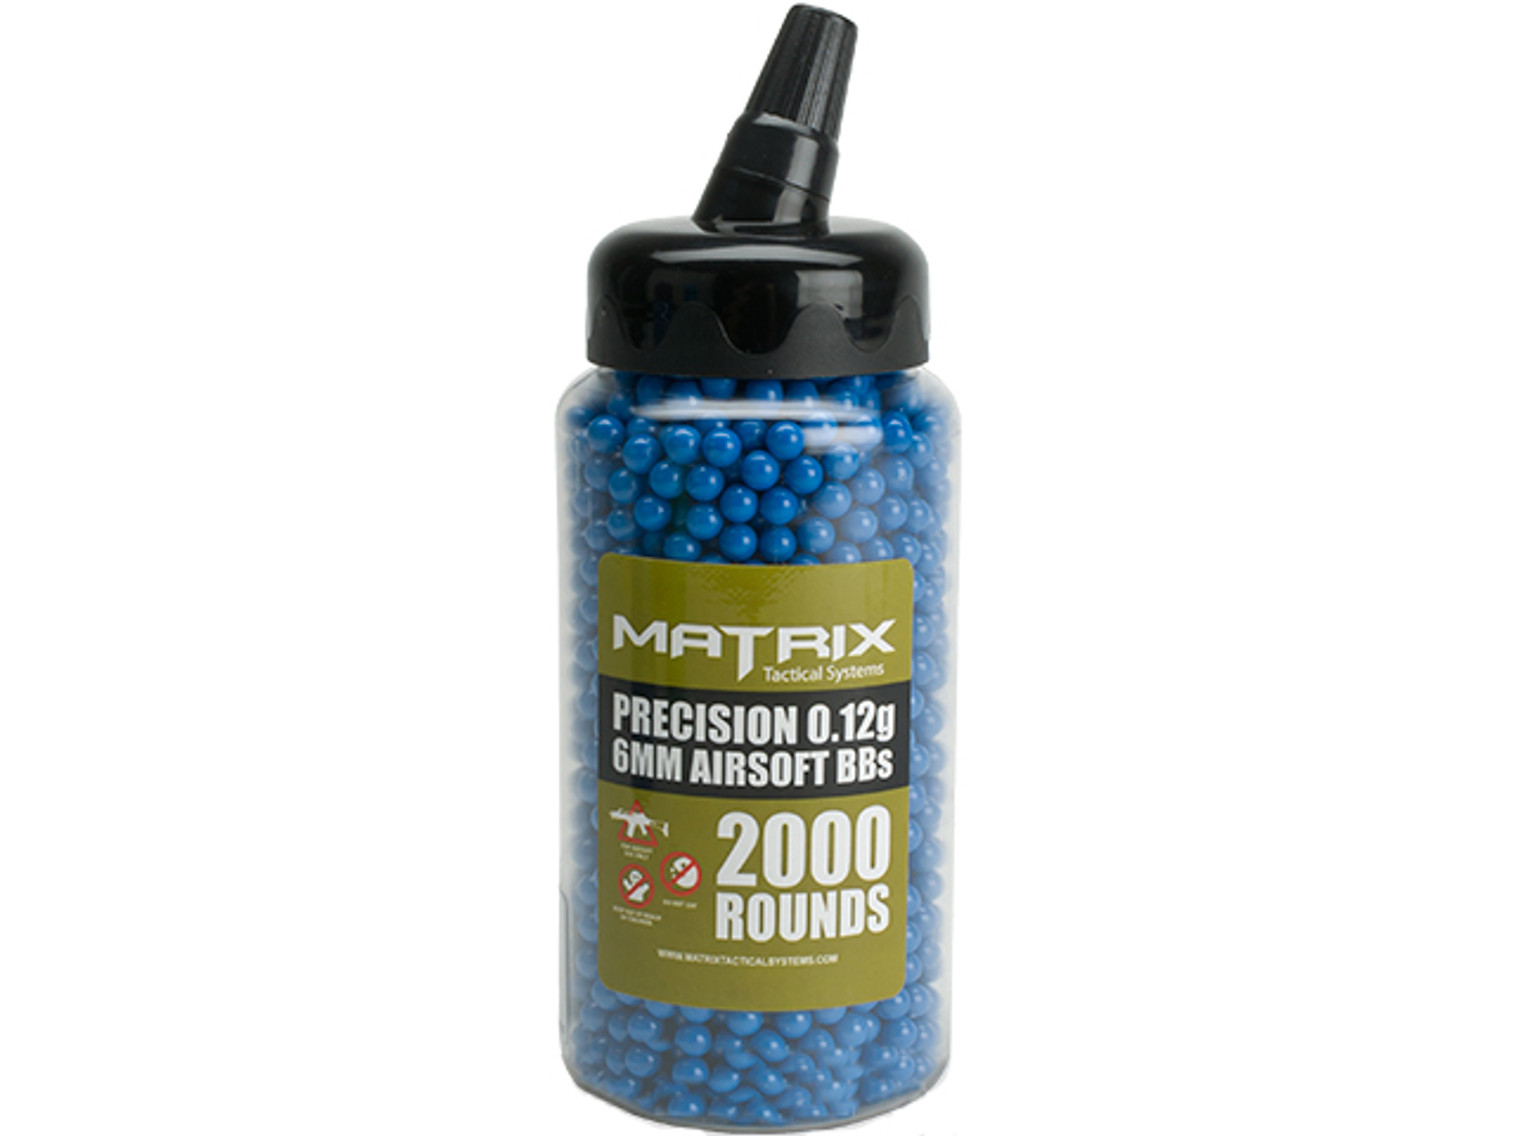 Matrix 0.12g Match Grade 6mm Airsoft BBs in Loading Bottle (Rounds: 2,000)